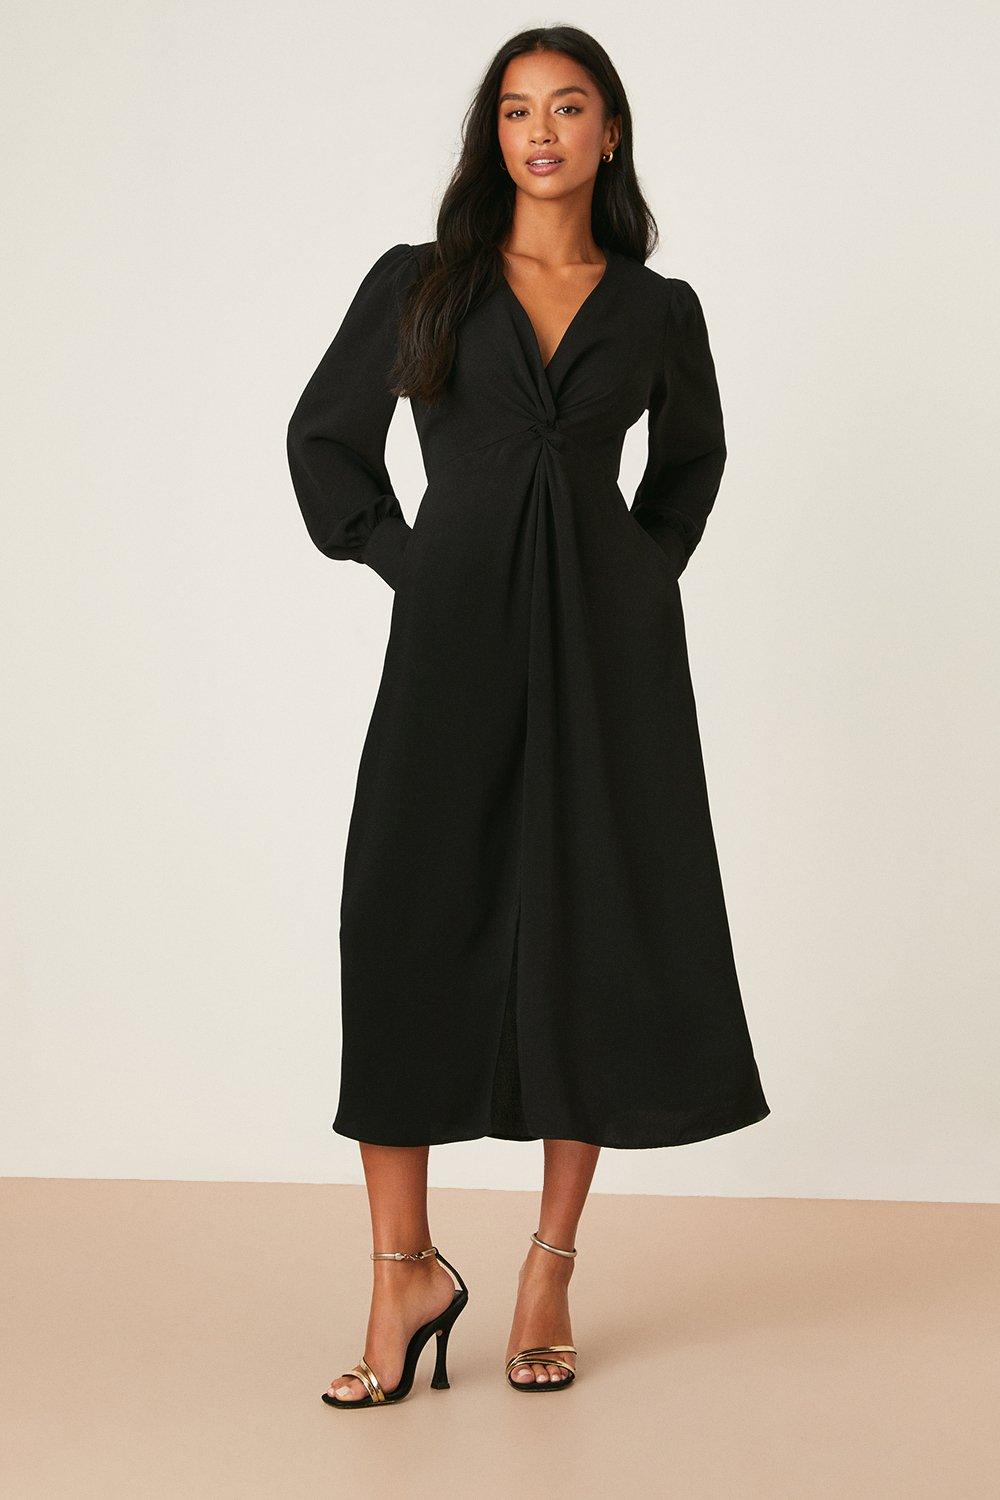 Women's Petite Black Twist Front Midi Dress - 6